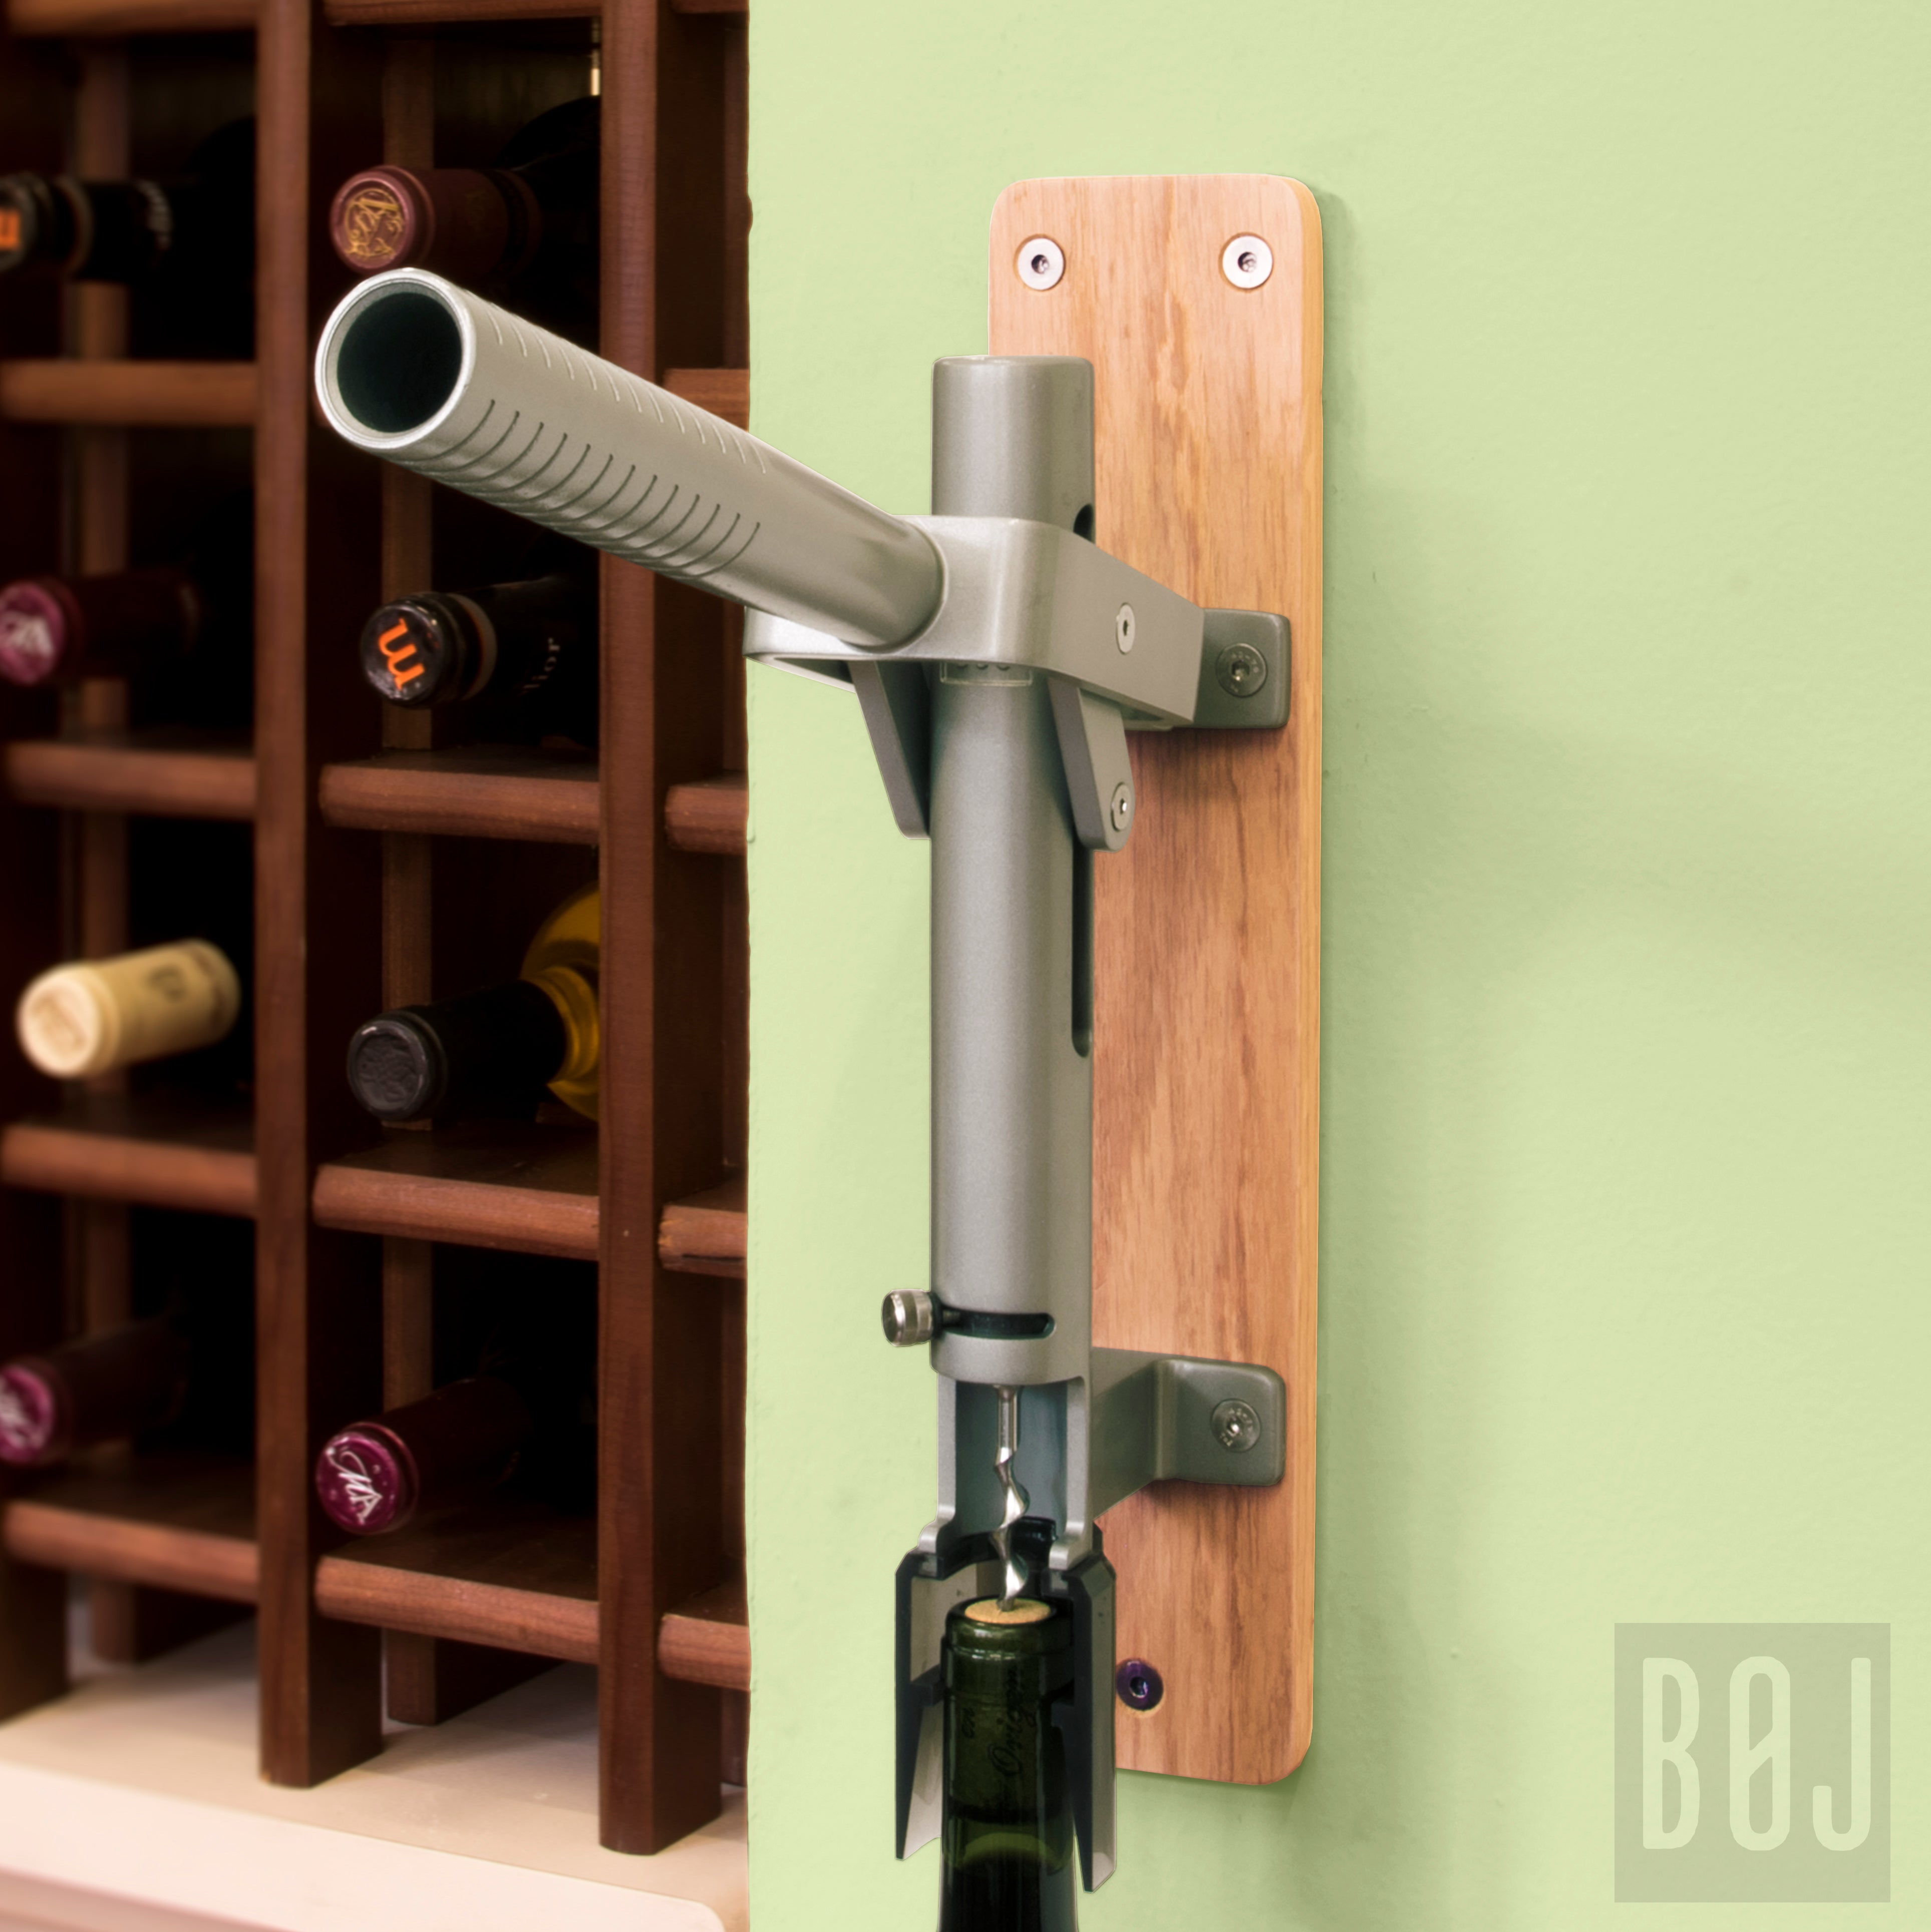 BOJ Professional Wine Opener Natural Color OakBacked Wall Mounted Corkscrew Model 110 10465 wineopeners.shop